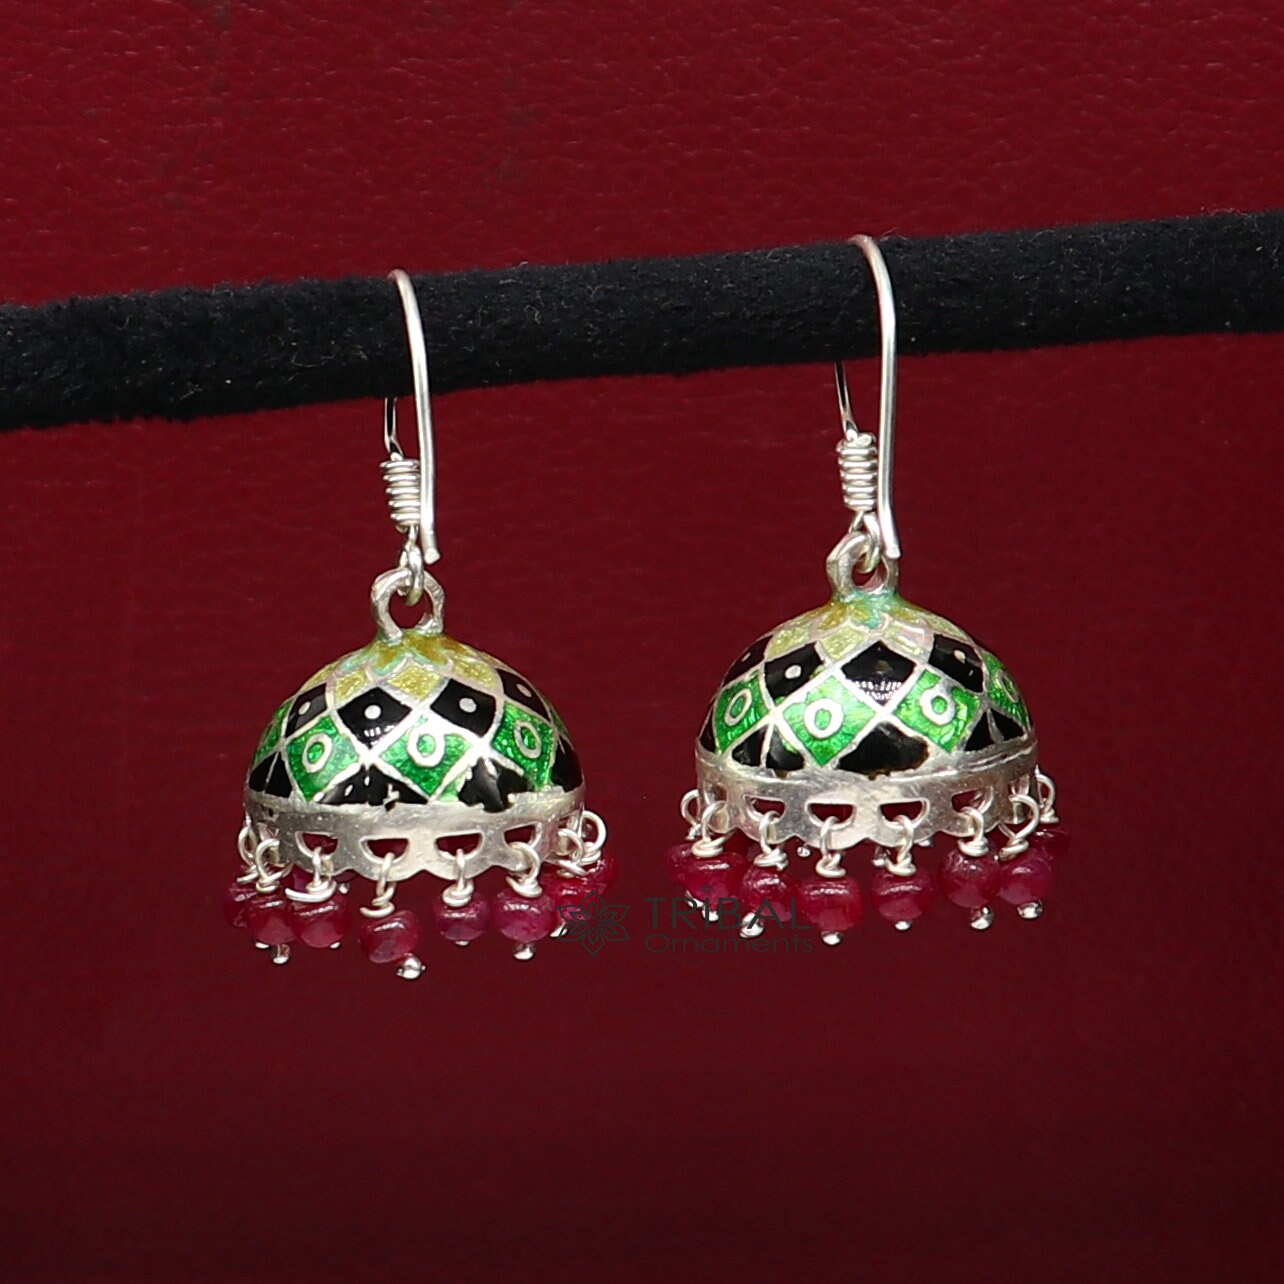 Trendy stylish  925 sterling silver Stylish colorful hoops earring chandelier, enamel work jhumka hanging drops brides earrings  s1188 - TRIBAL ORNAMENTS